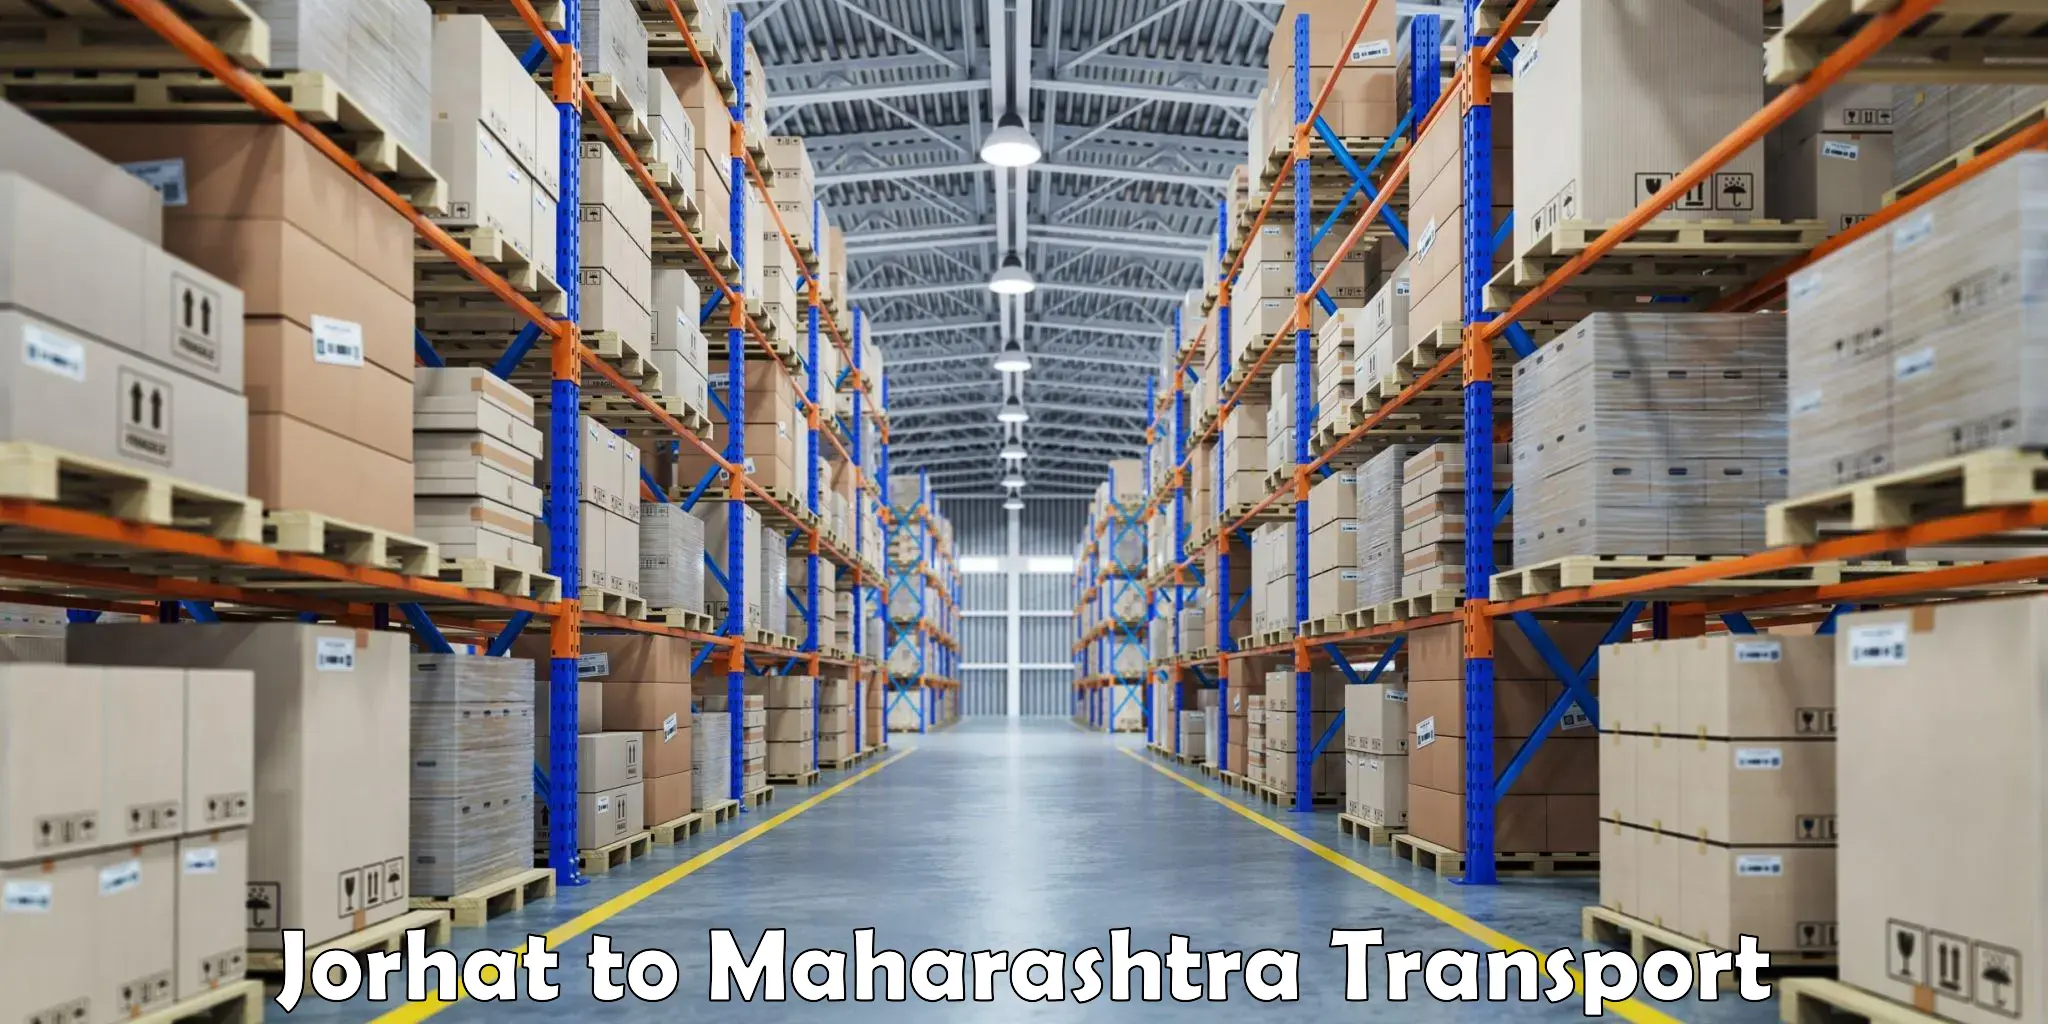 Transport in sharing in Jorhat to Maharashtra